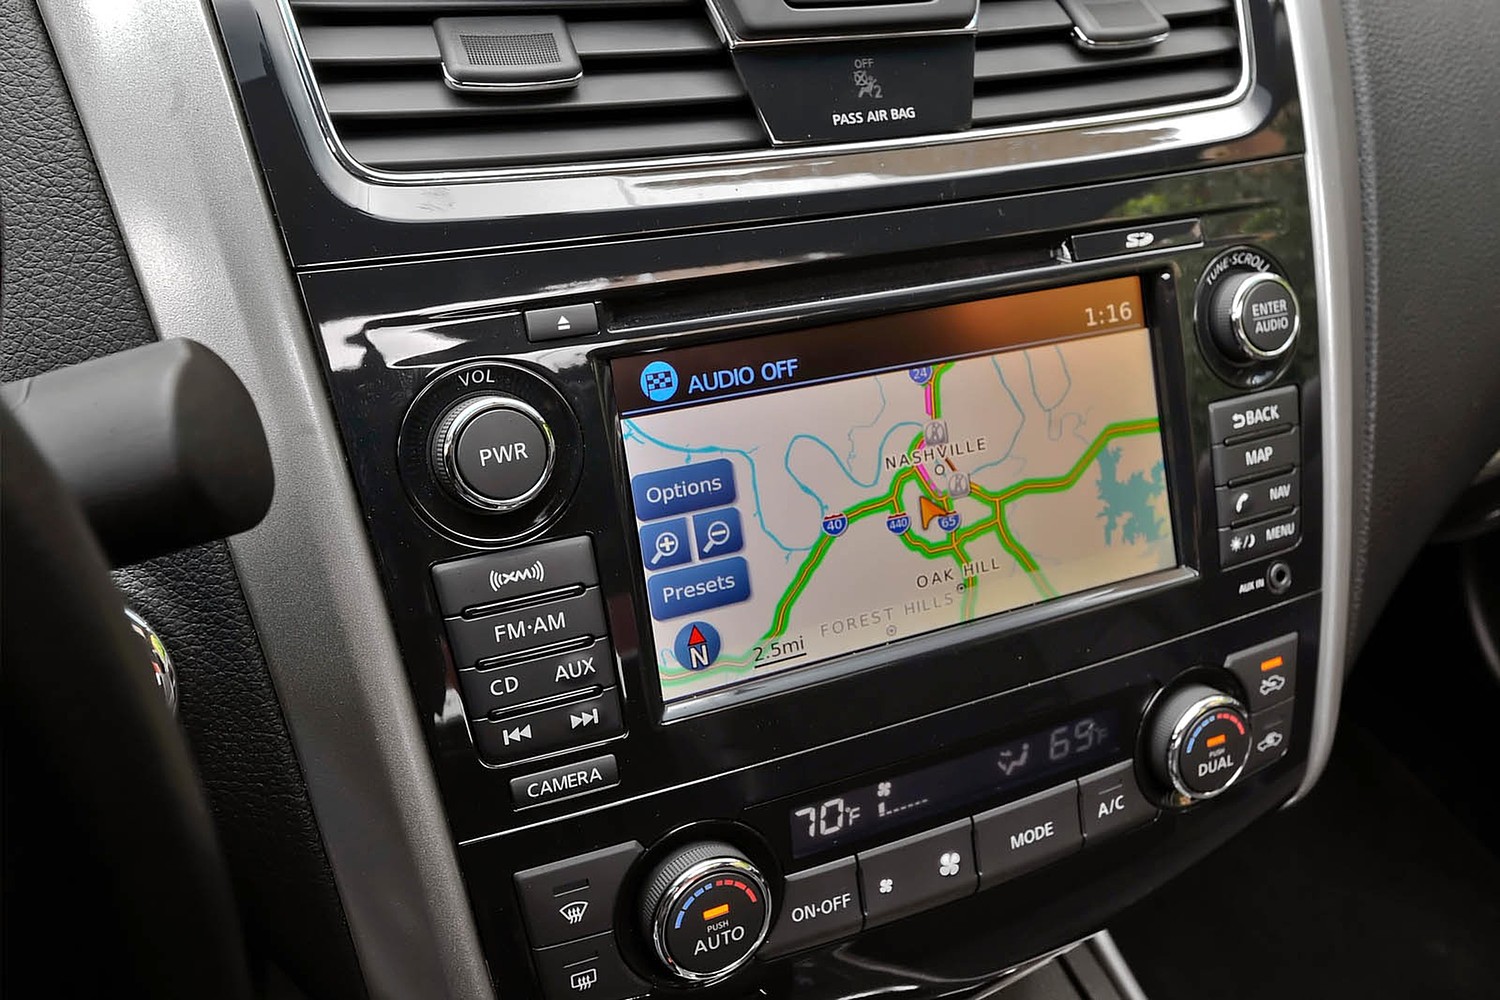 Nissan Altima 3.5 SL Sedan Navigation System (2013 model year shown)